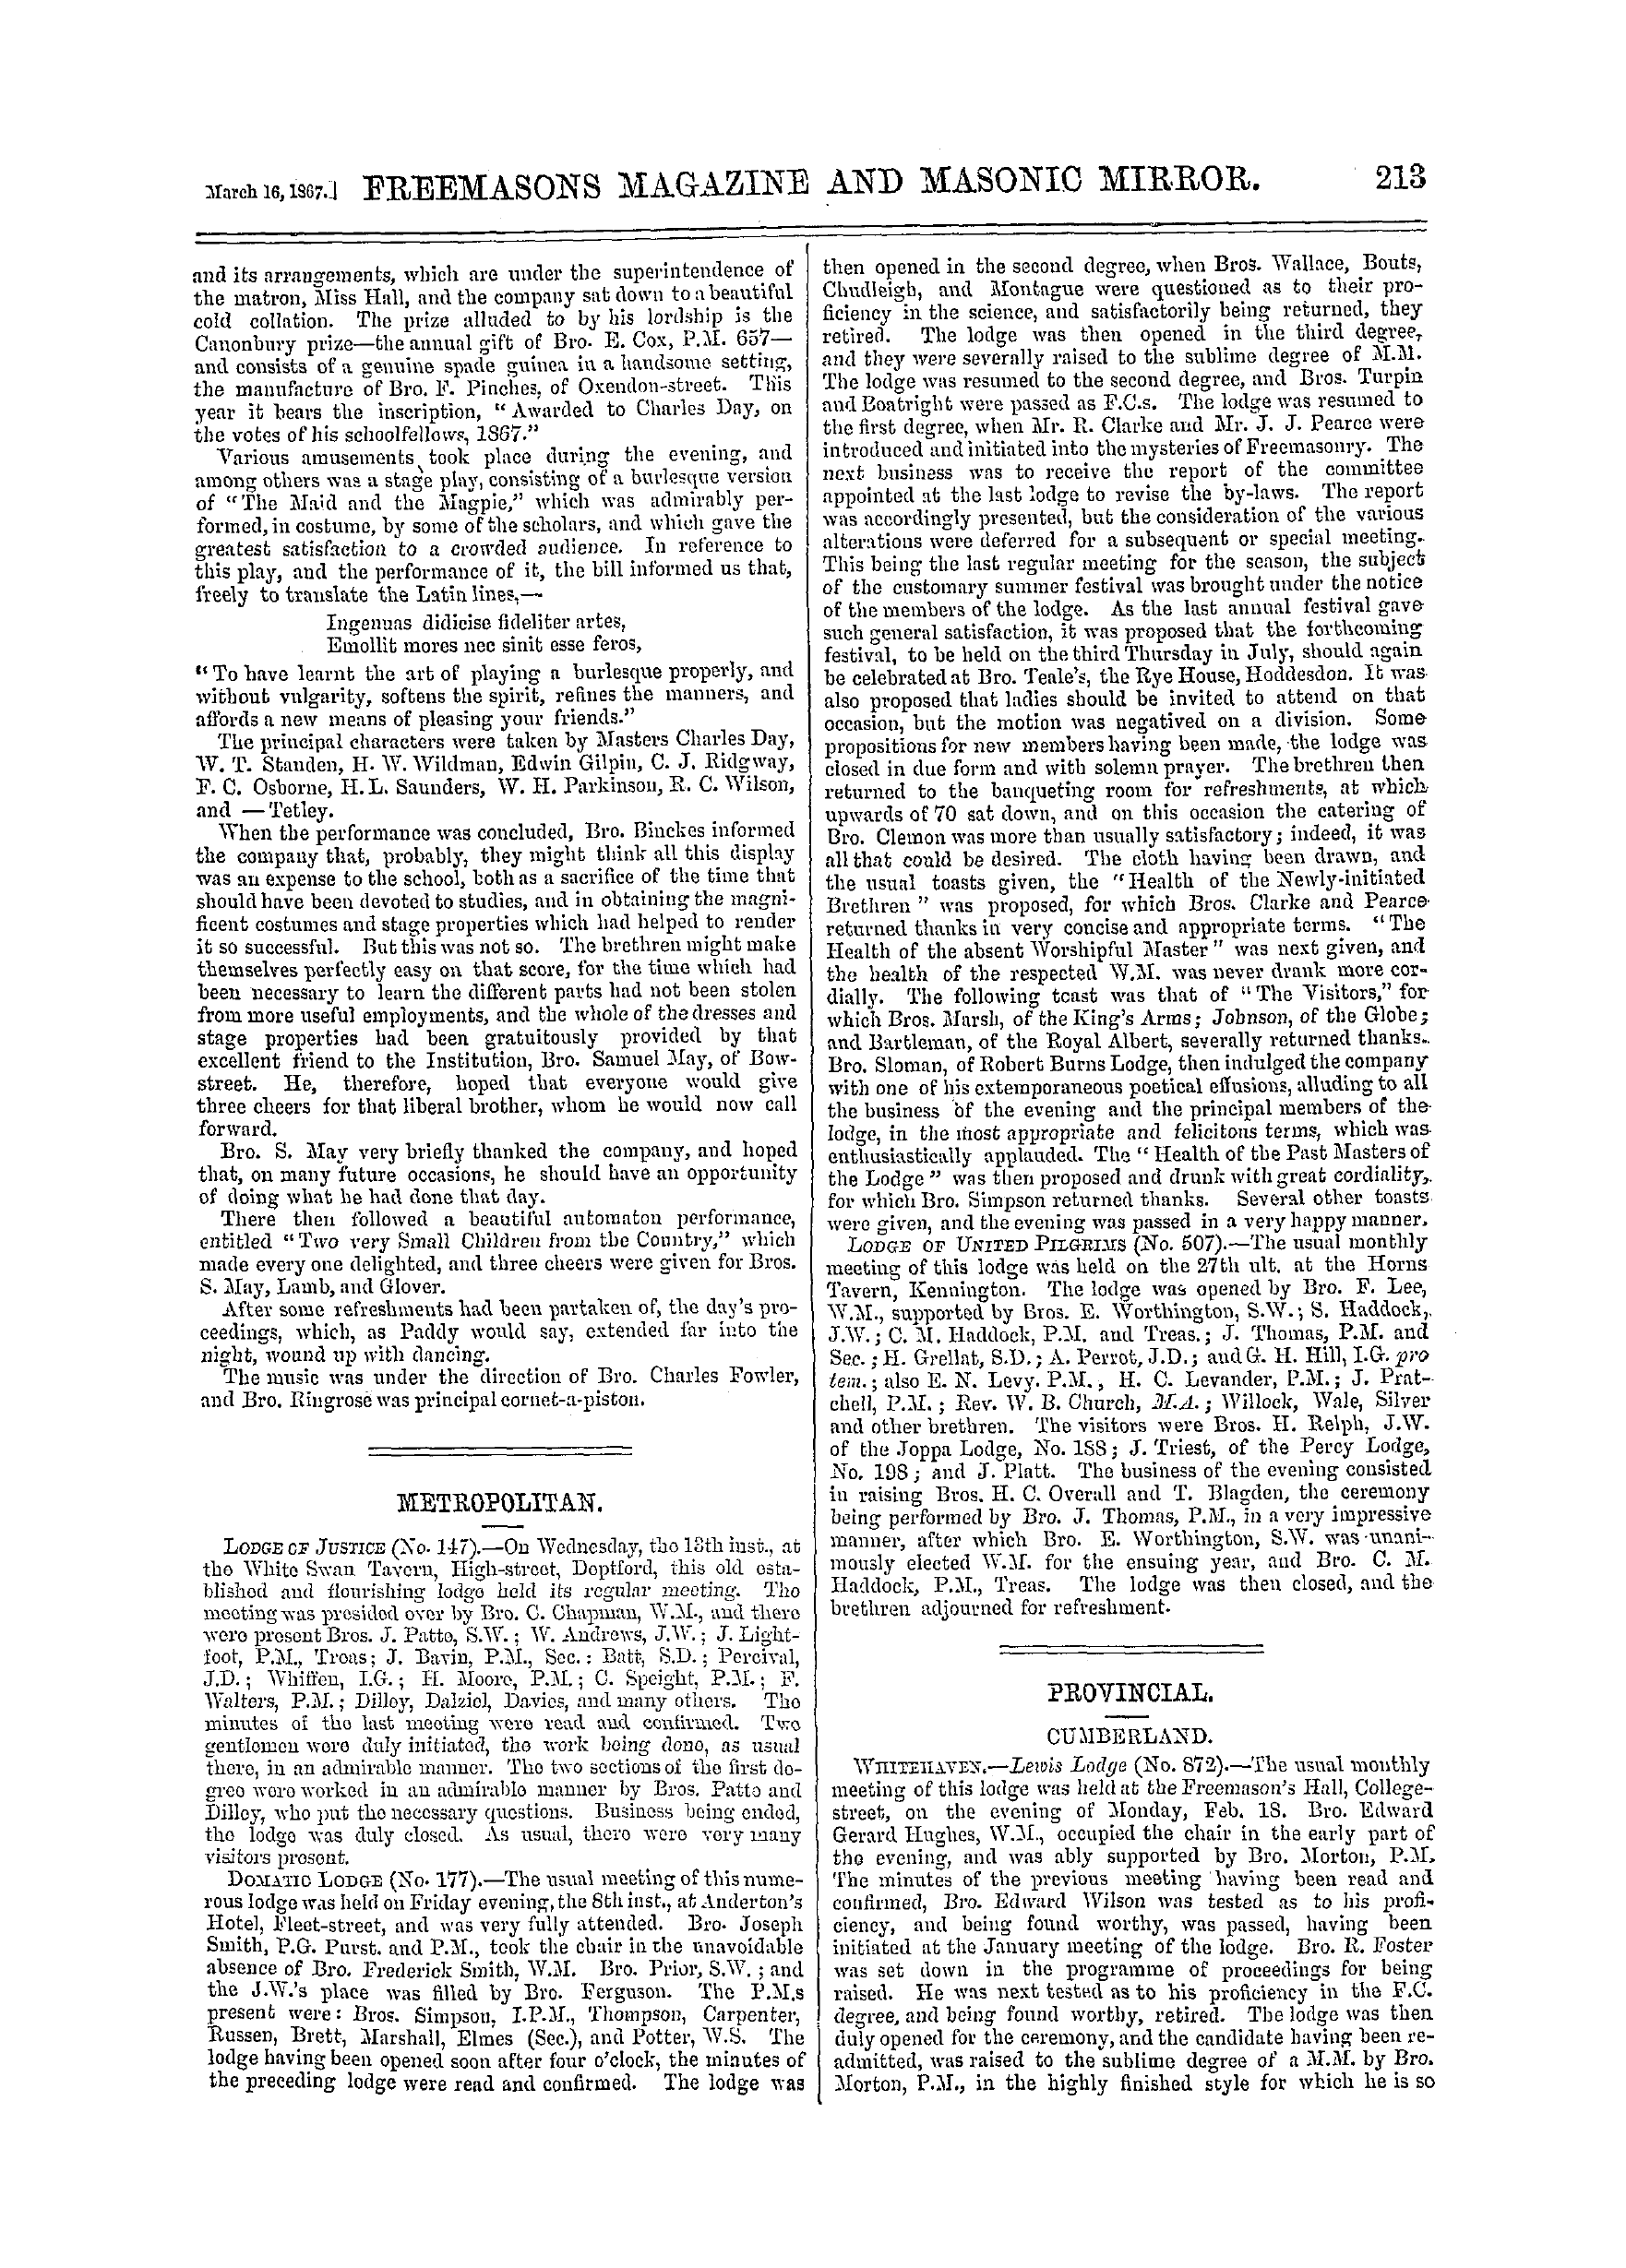 The Freemasons' Monthly Magazine: 1867-03-16 - Provincial.